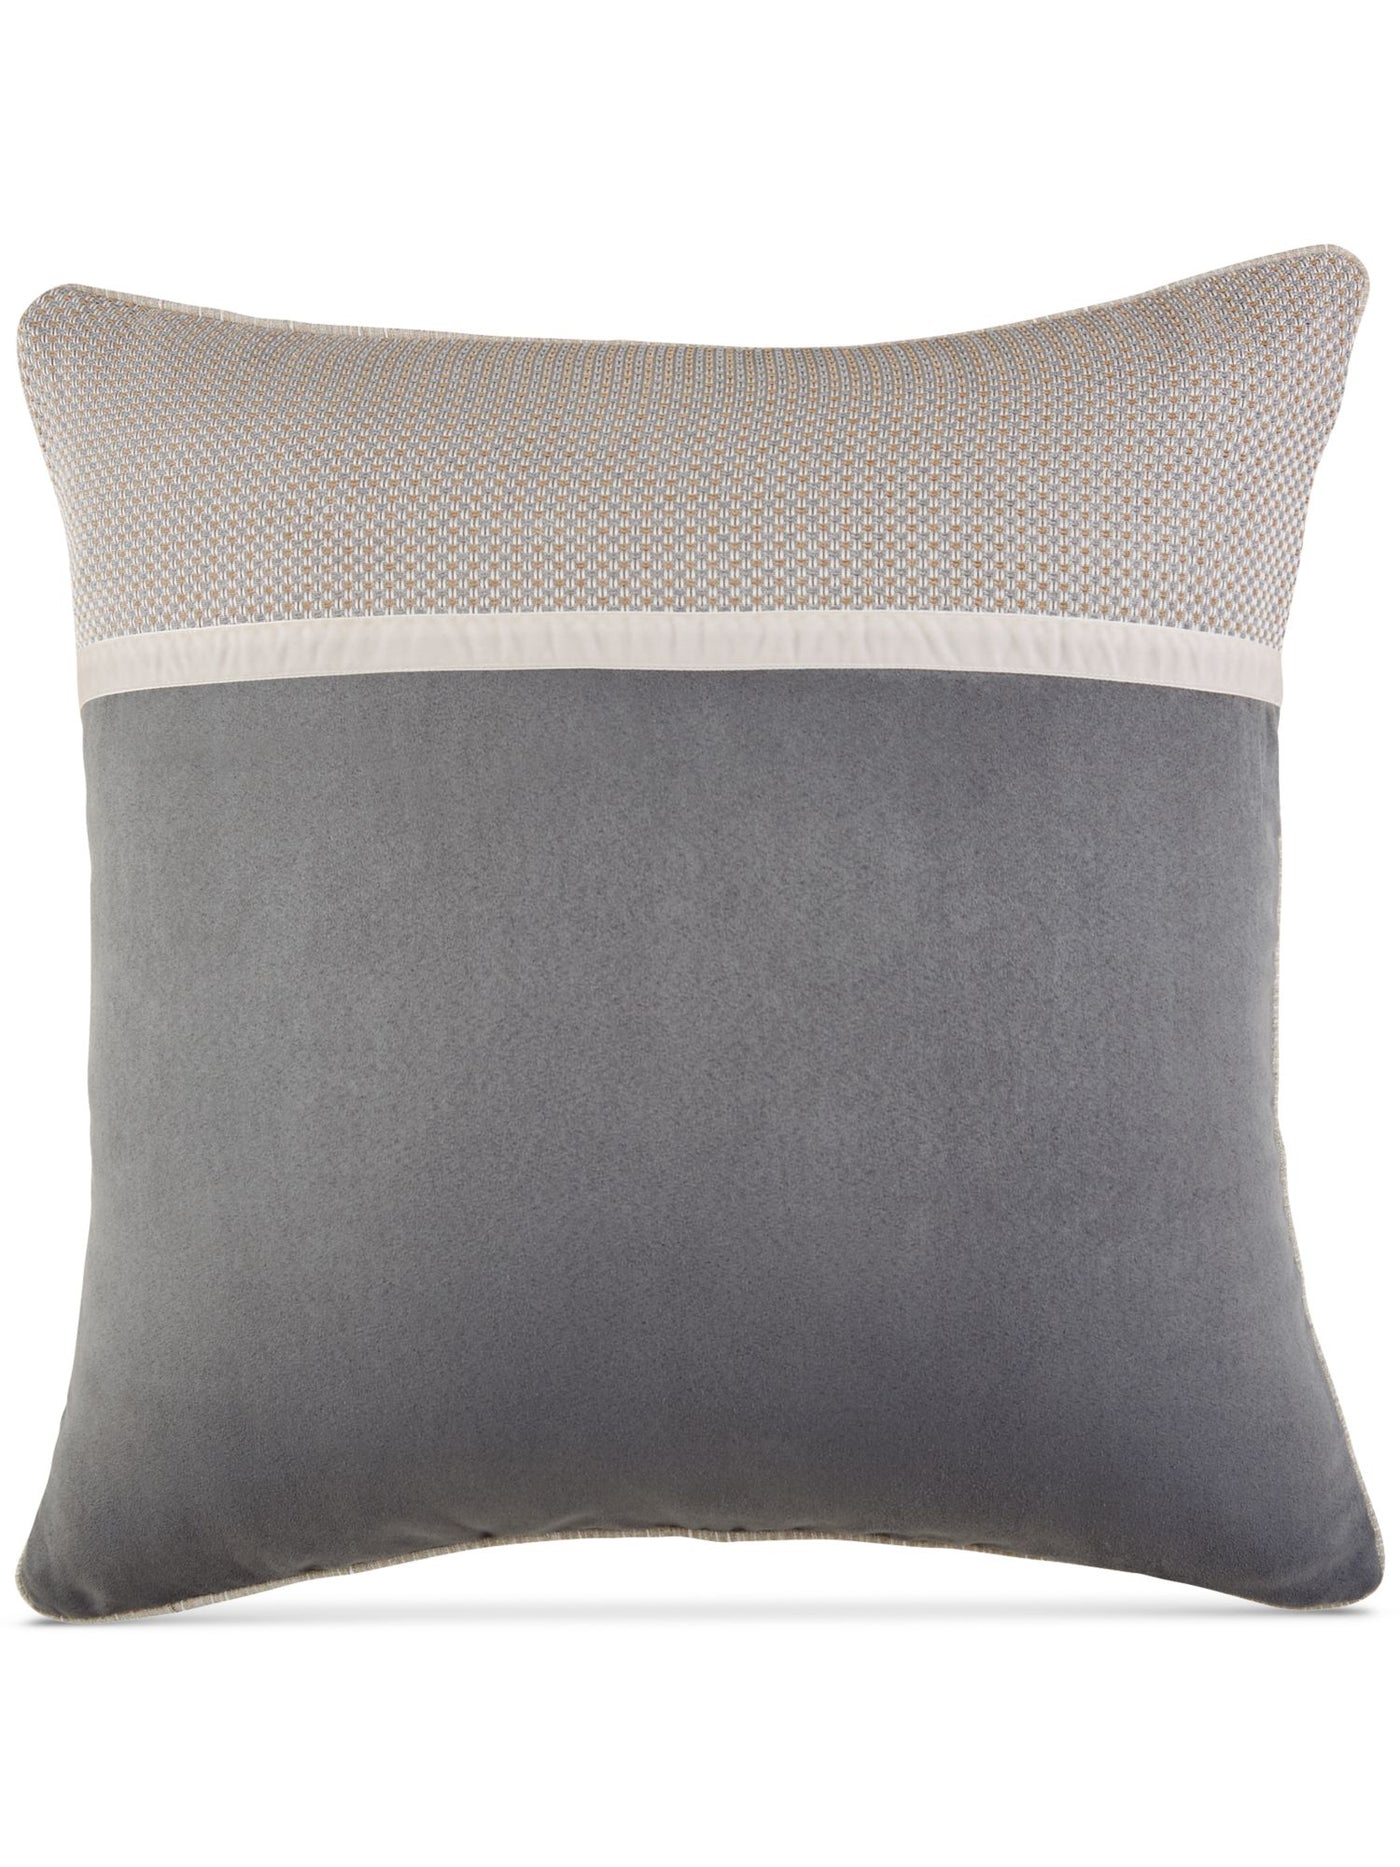 CROSCILL Ansonia Gray Tan Beige Color Block Textured 26X26 Pillow Sham